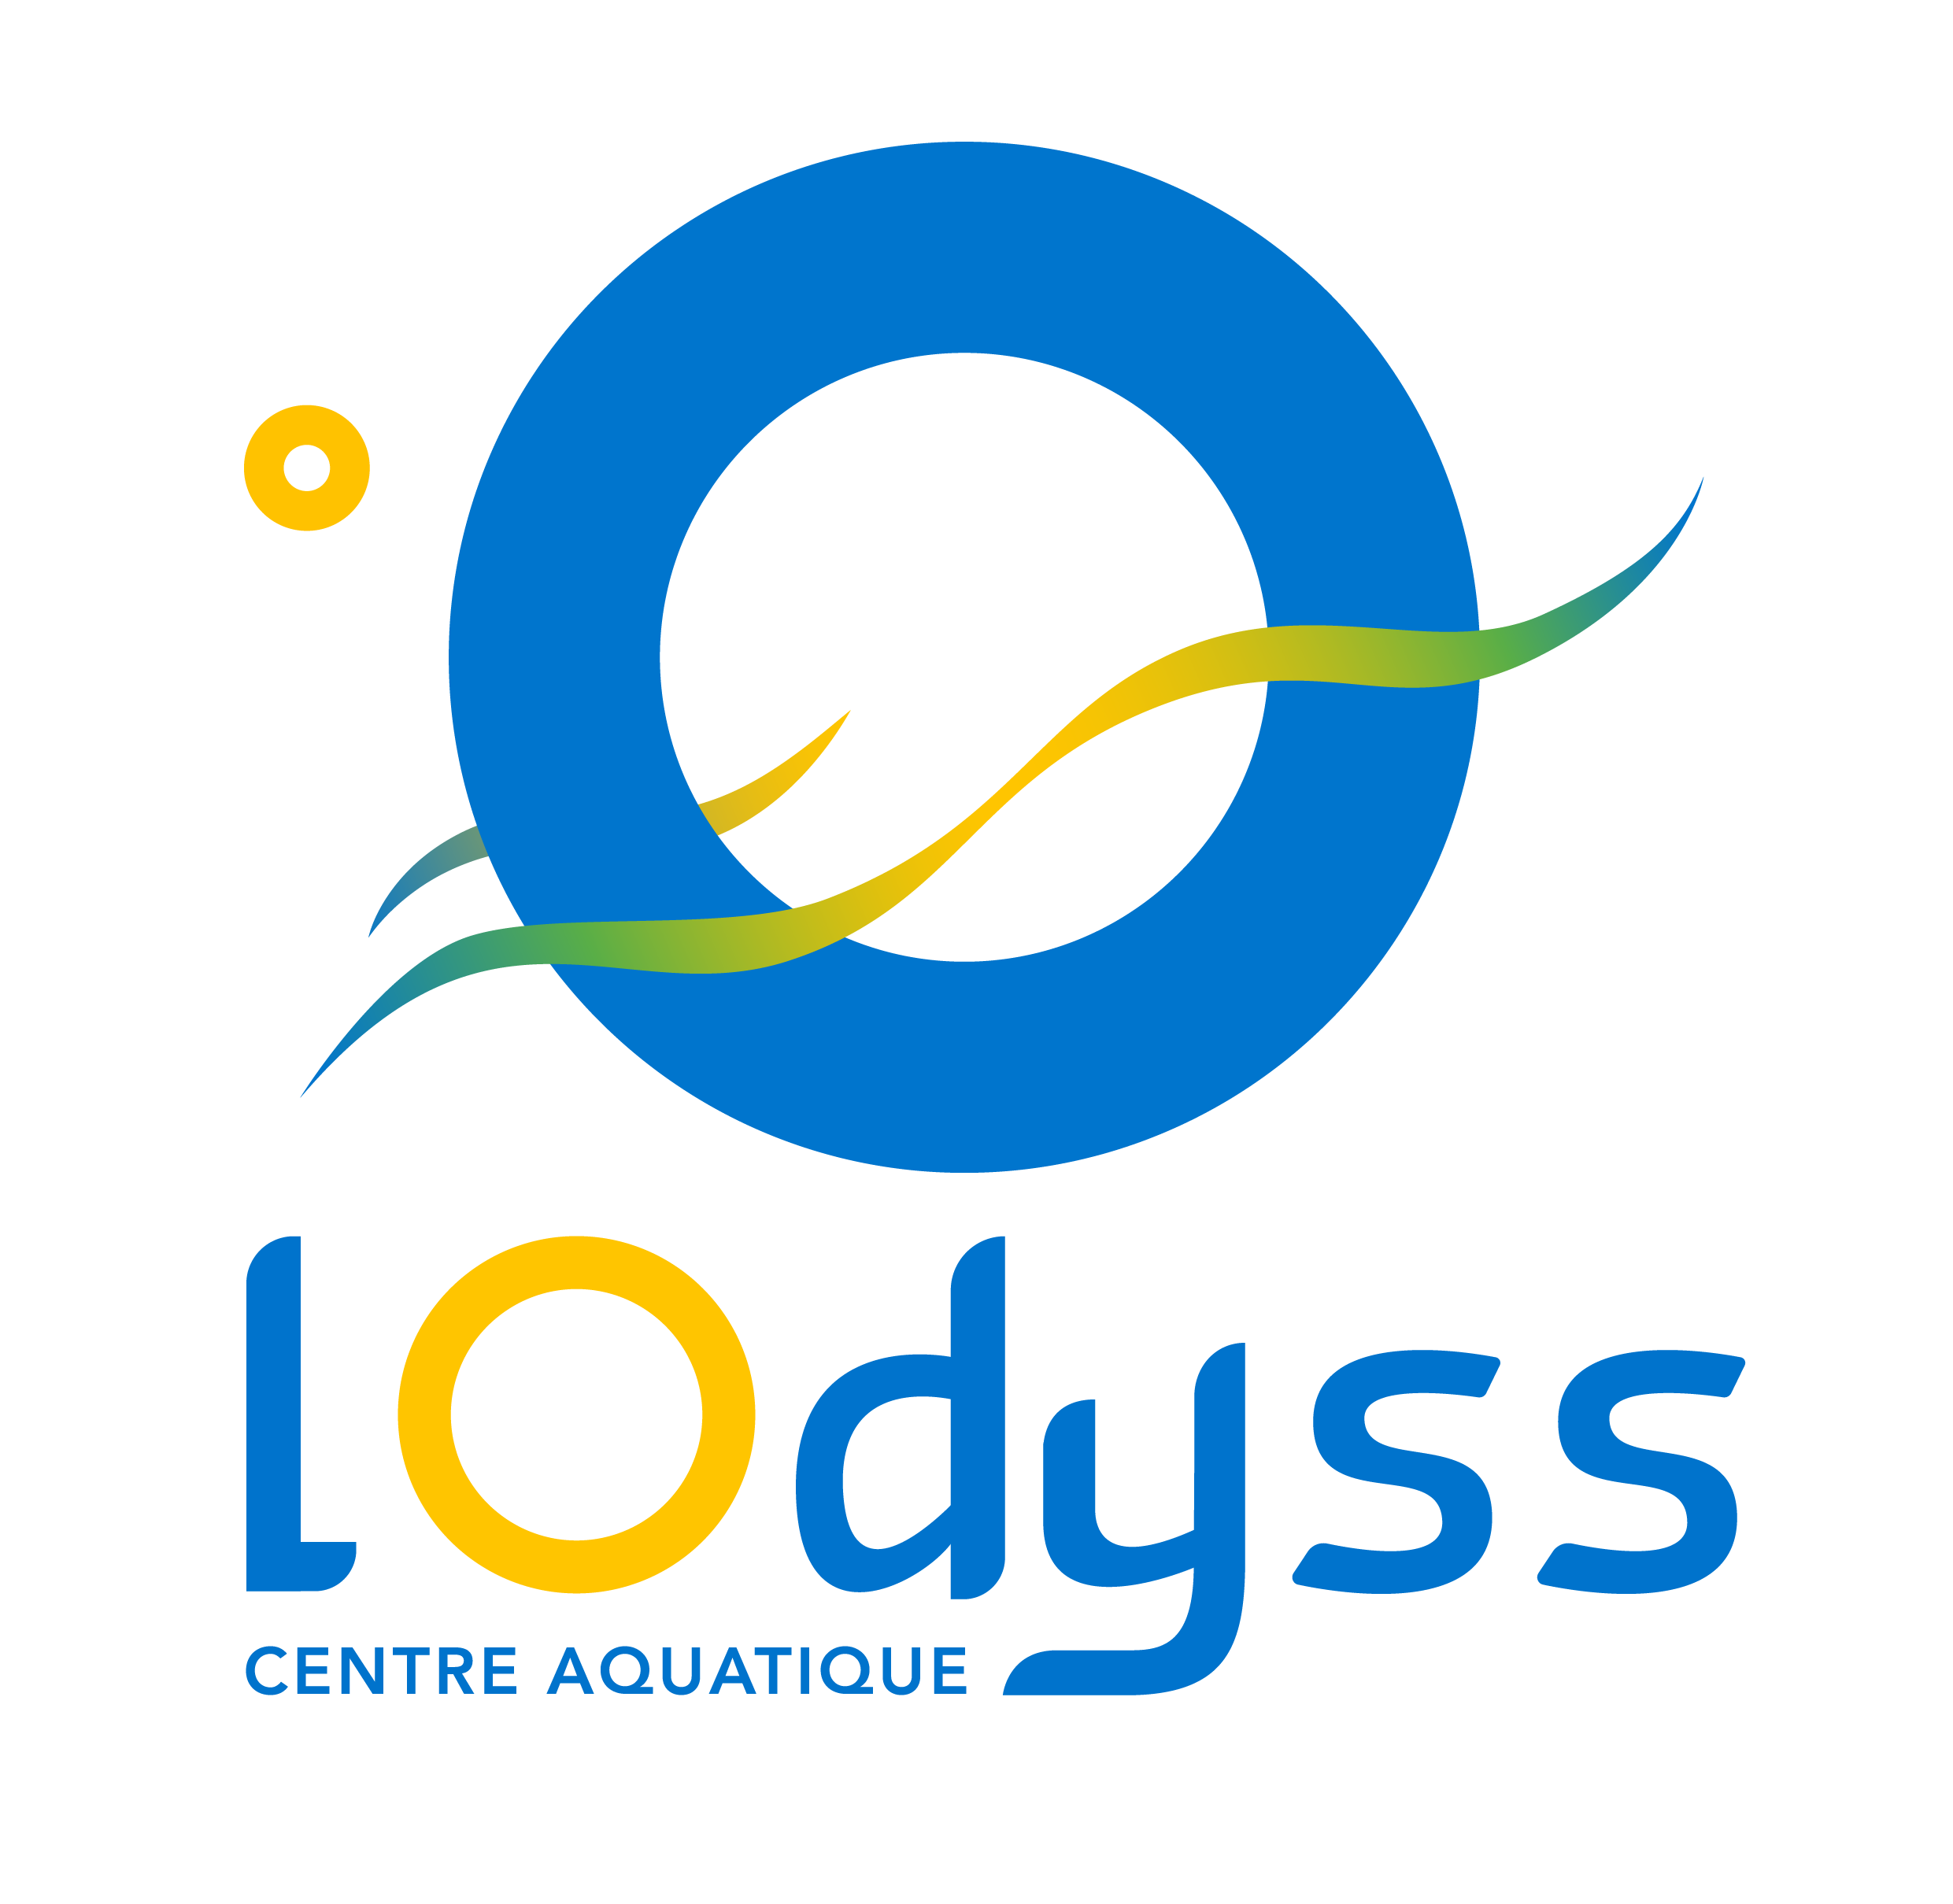 Centre Aquatique l'Odyss